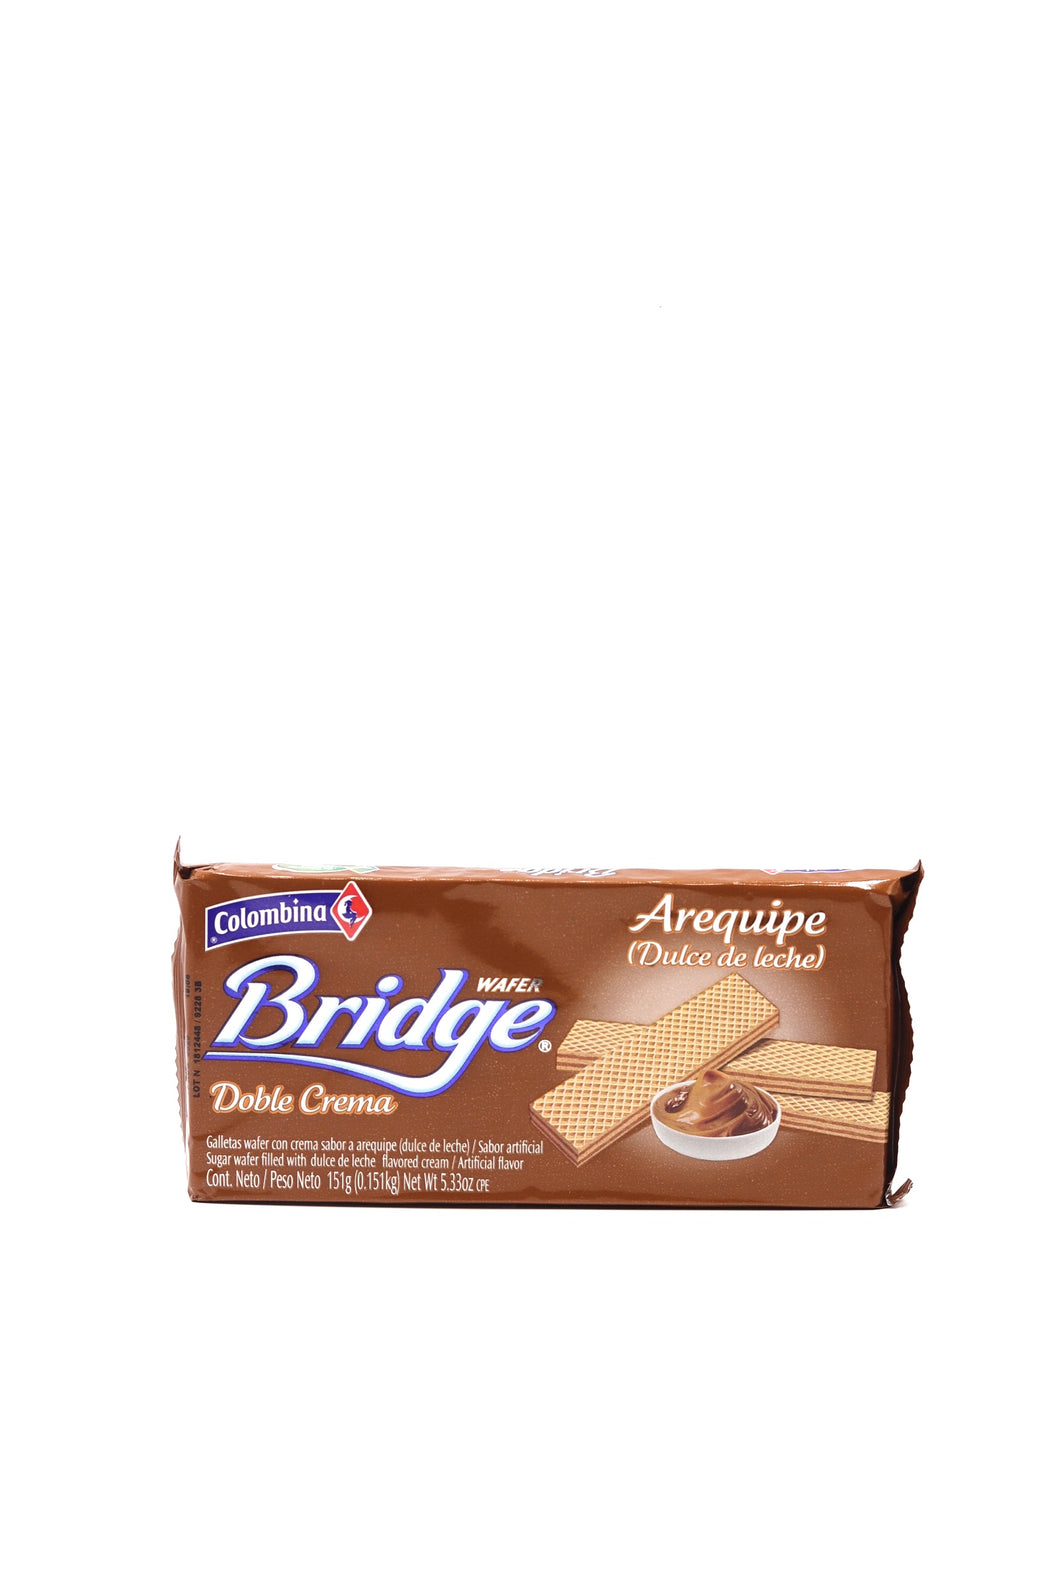 Bridge Wafer Doble Crema (Dulce de leche)